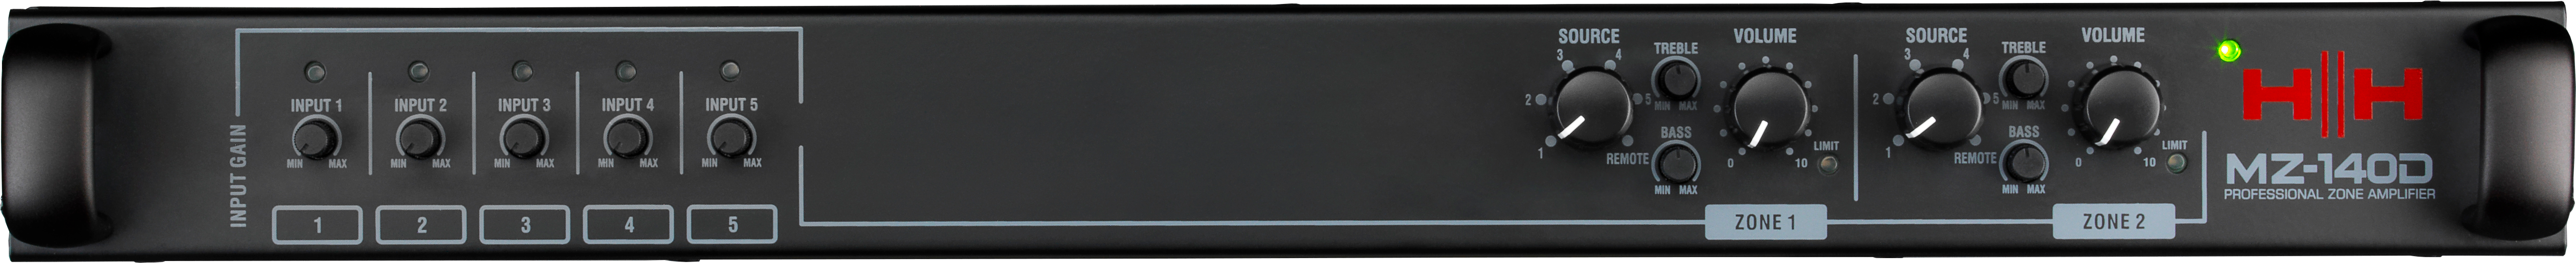 HH MZ-140D - Panel view